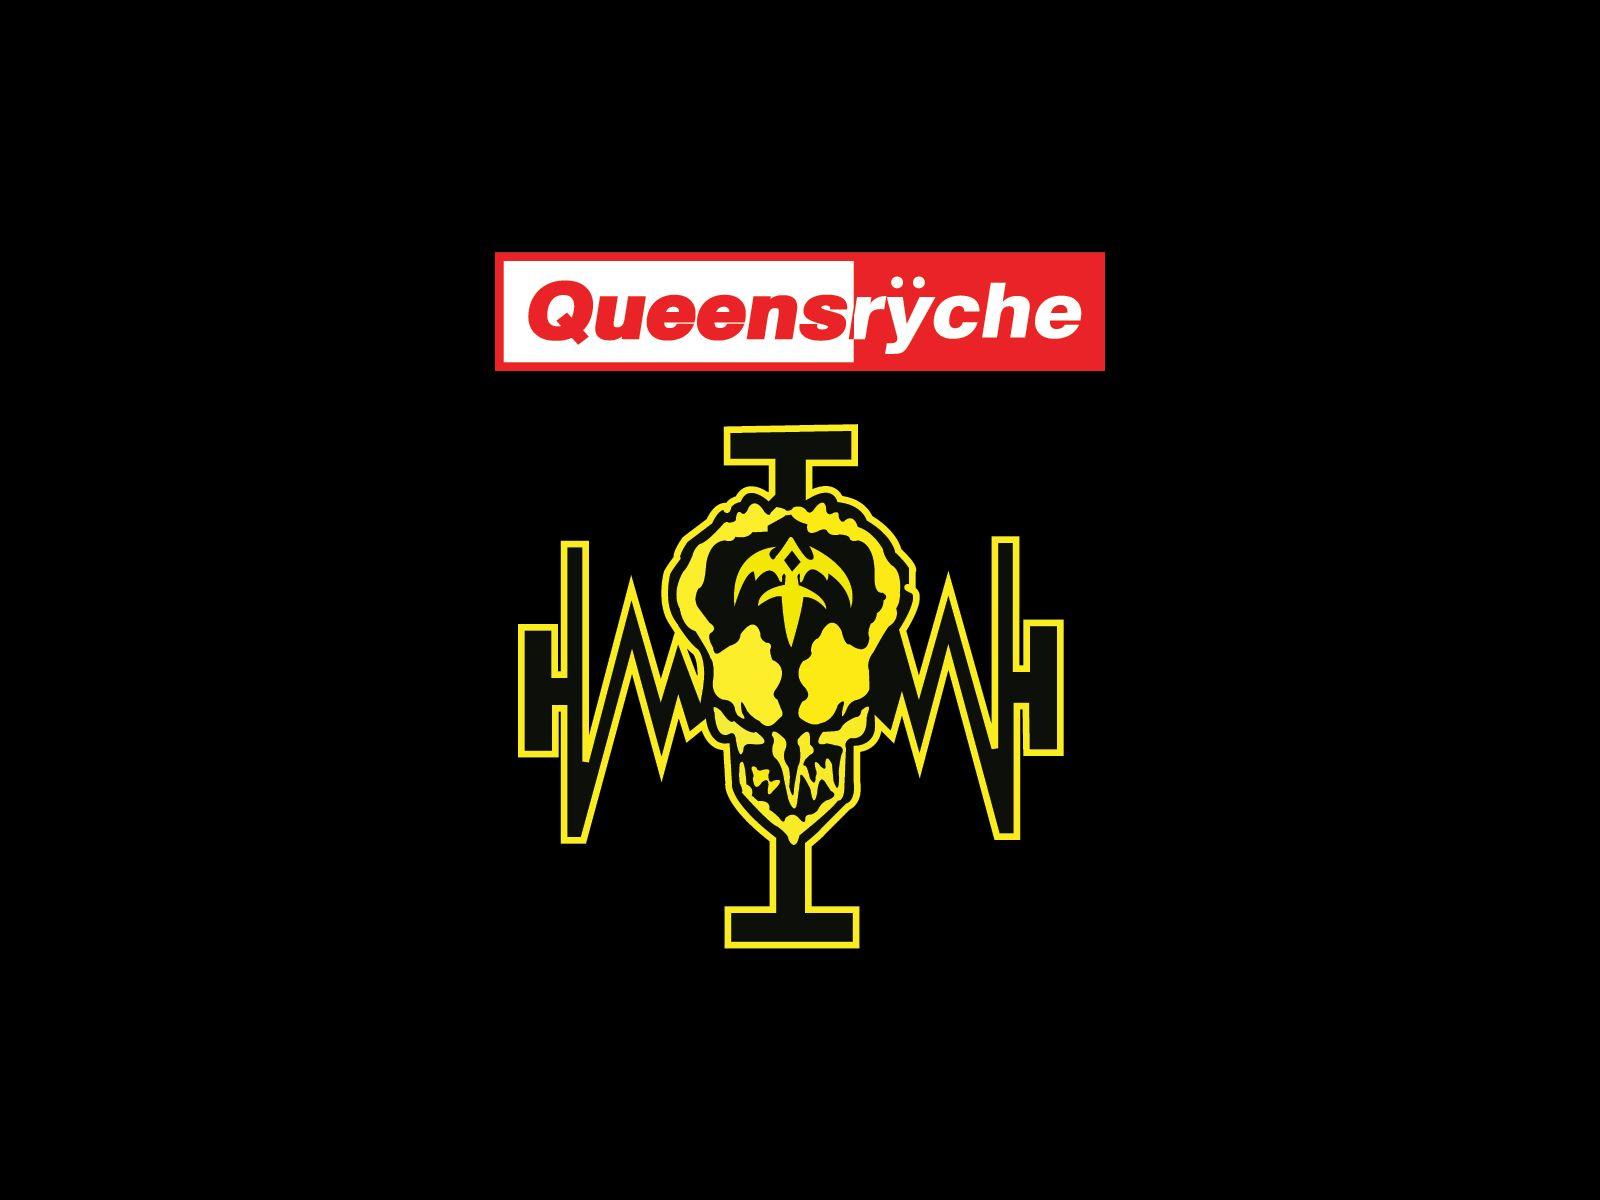 Queensryche Logo - Queensryche band logo and wallpaper | Band logos - Rock band logos ...